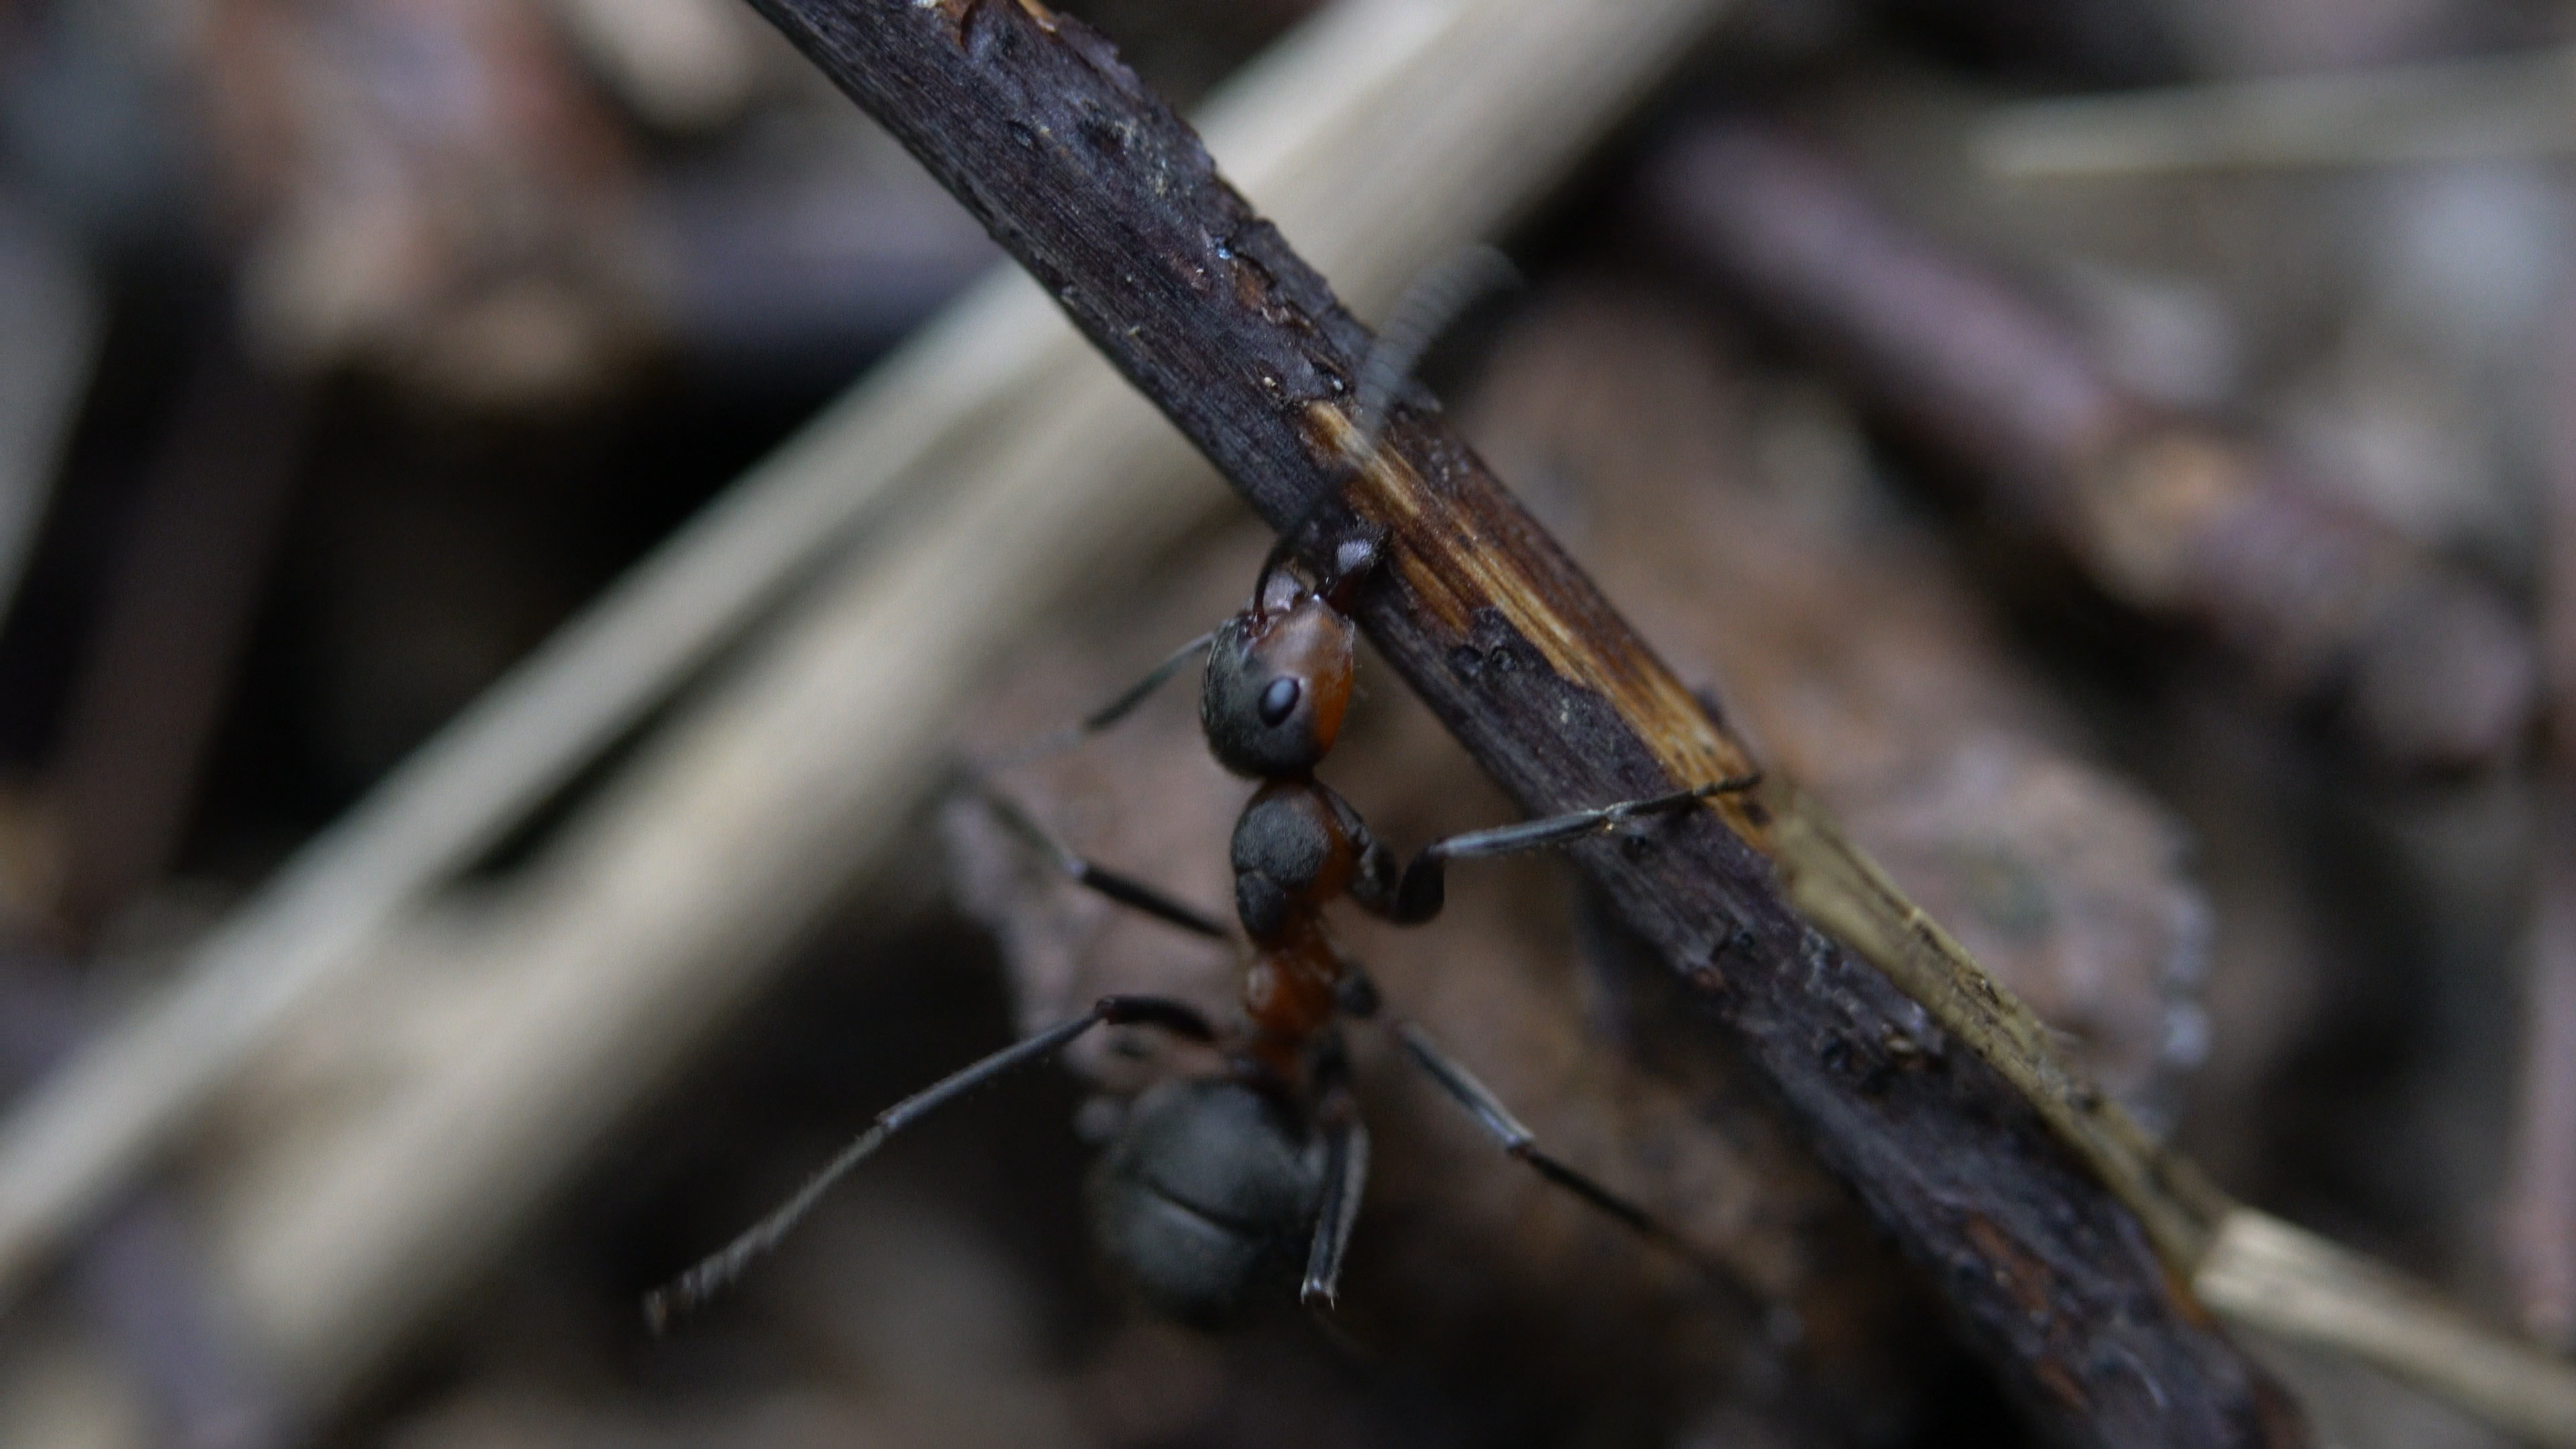 Fifad ant research, Fascinating discoveries, Ant behavior, Scientific study, 3840x2160 4K Desktop